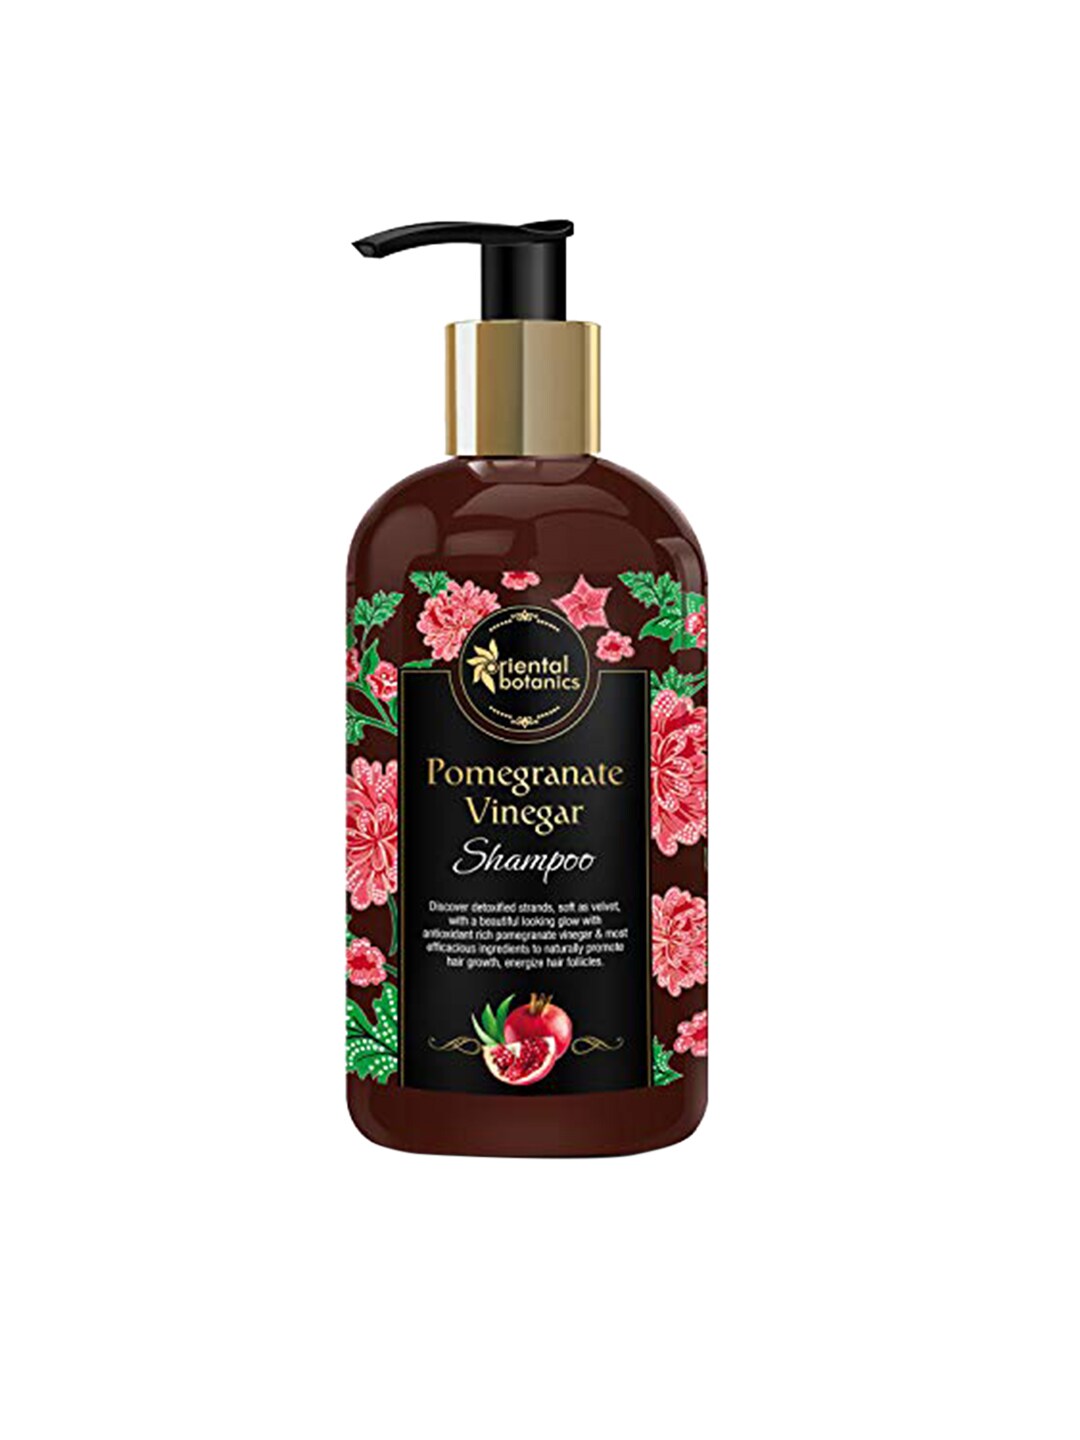 Oriental Botanics Pomegranate Vinegar Shampoo - 300ml Price in India